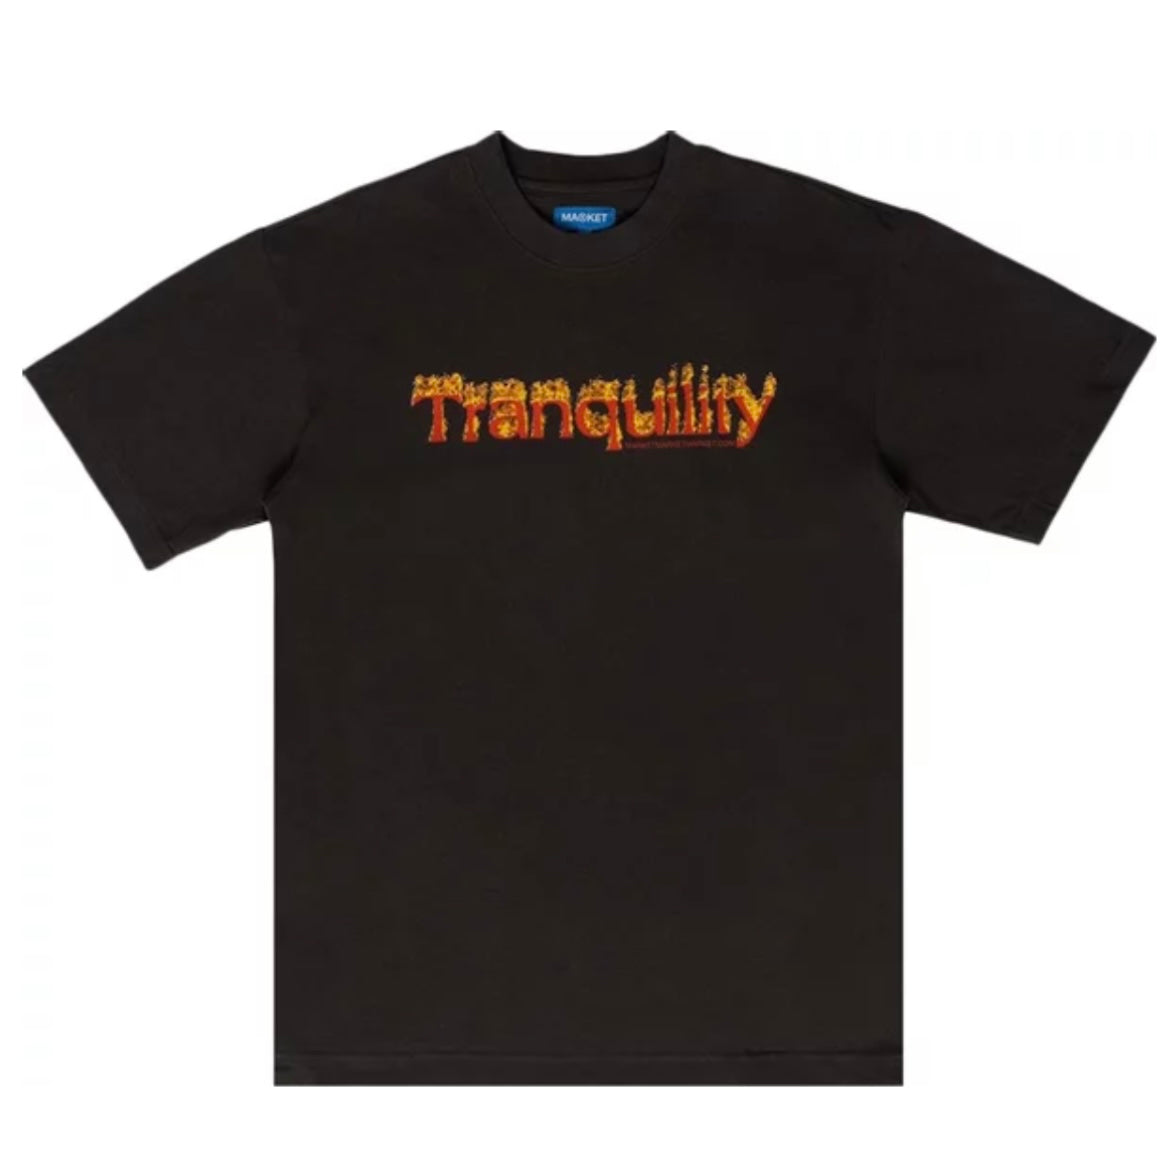 Market Tranquility T-Shirt, washed Black